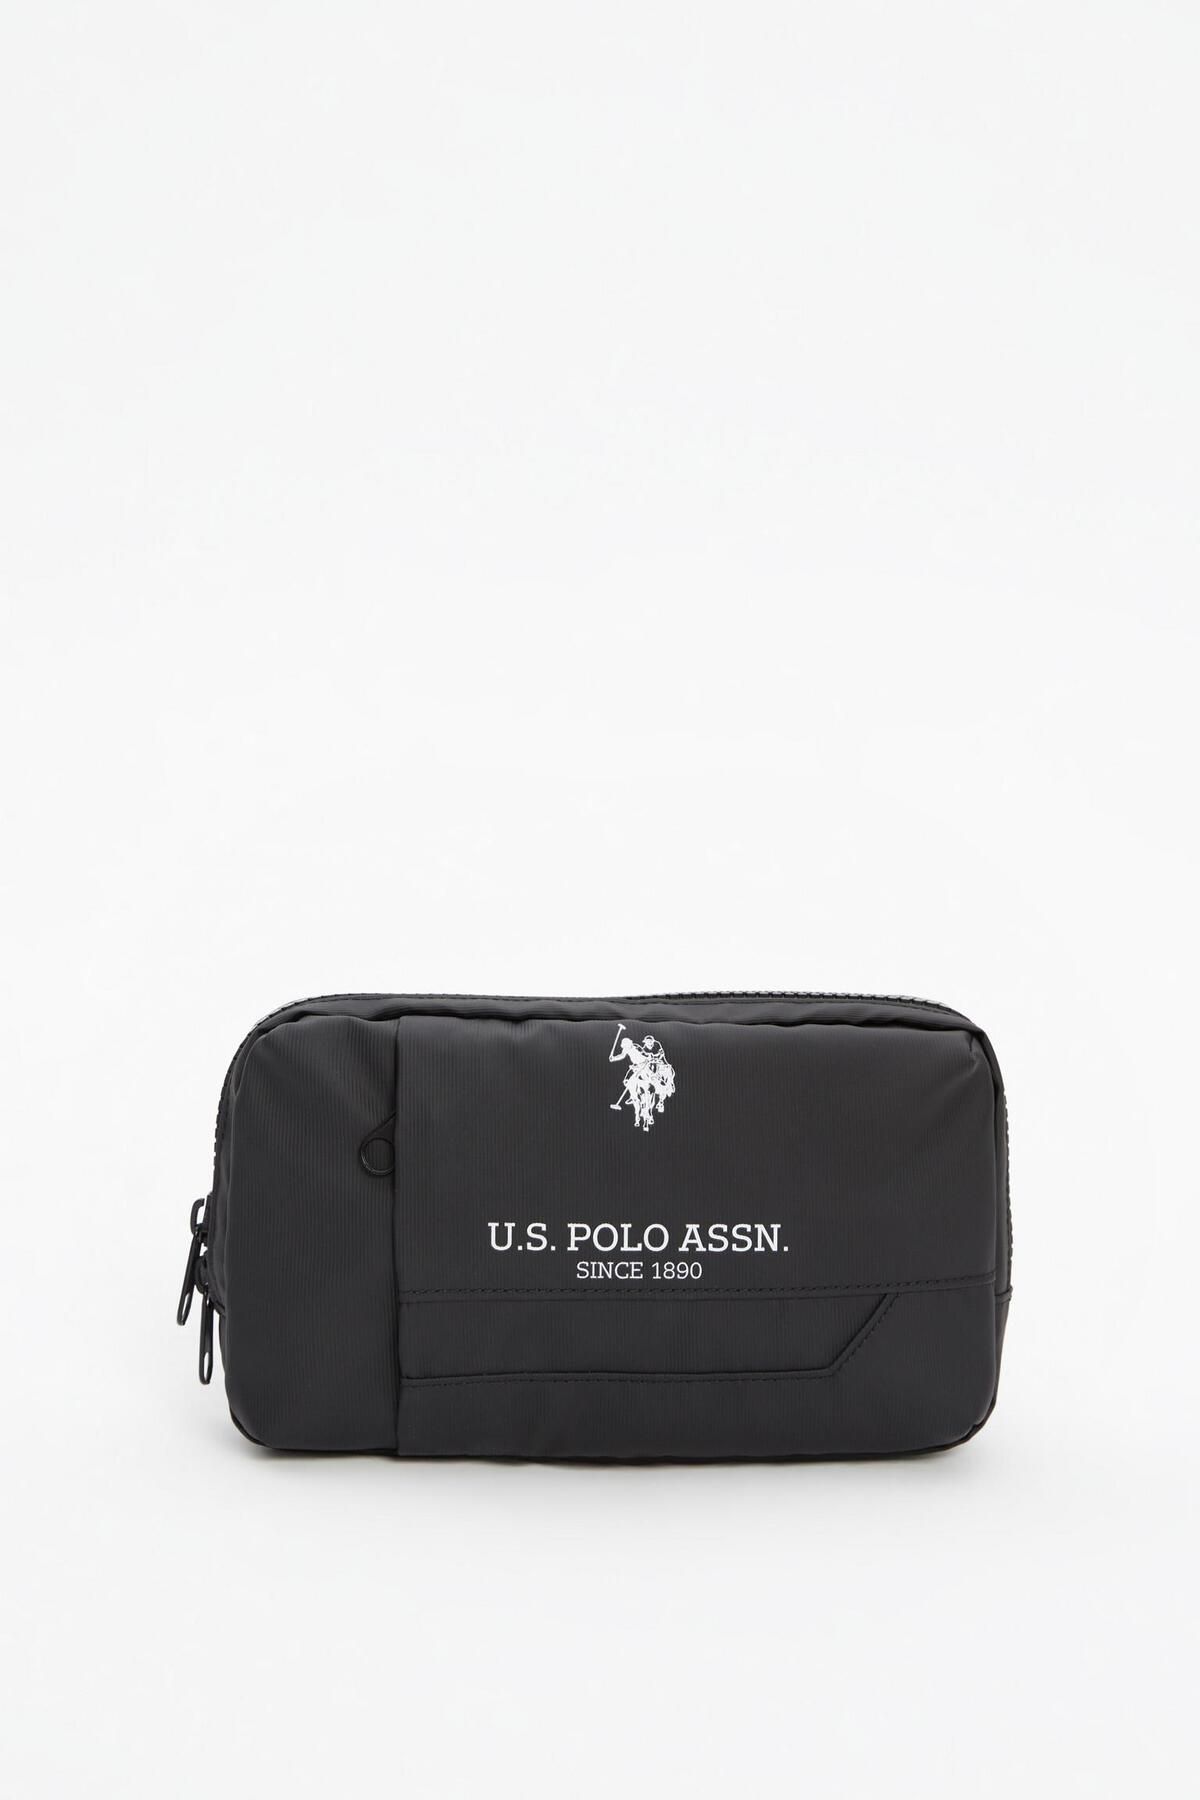 U.S. Polo Assn. U.S. POLO ASSN. PLEVR23611 Siyah Erkek Bel Çantası